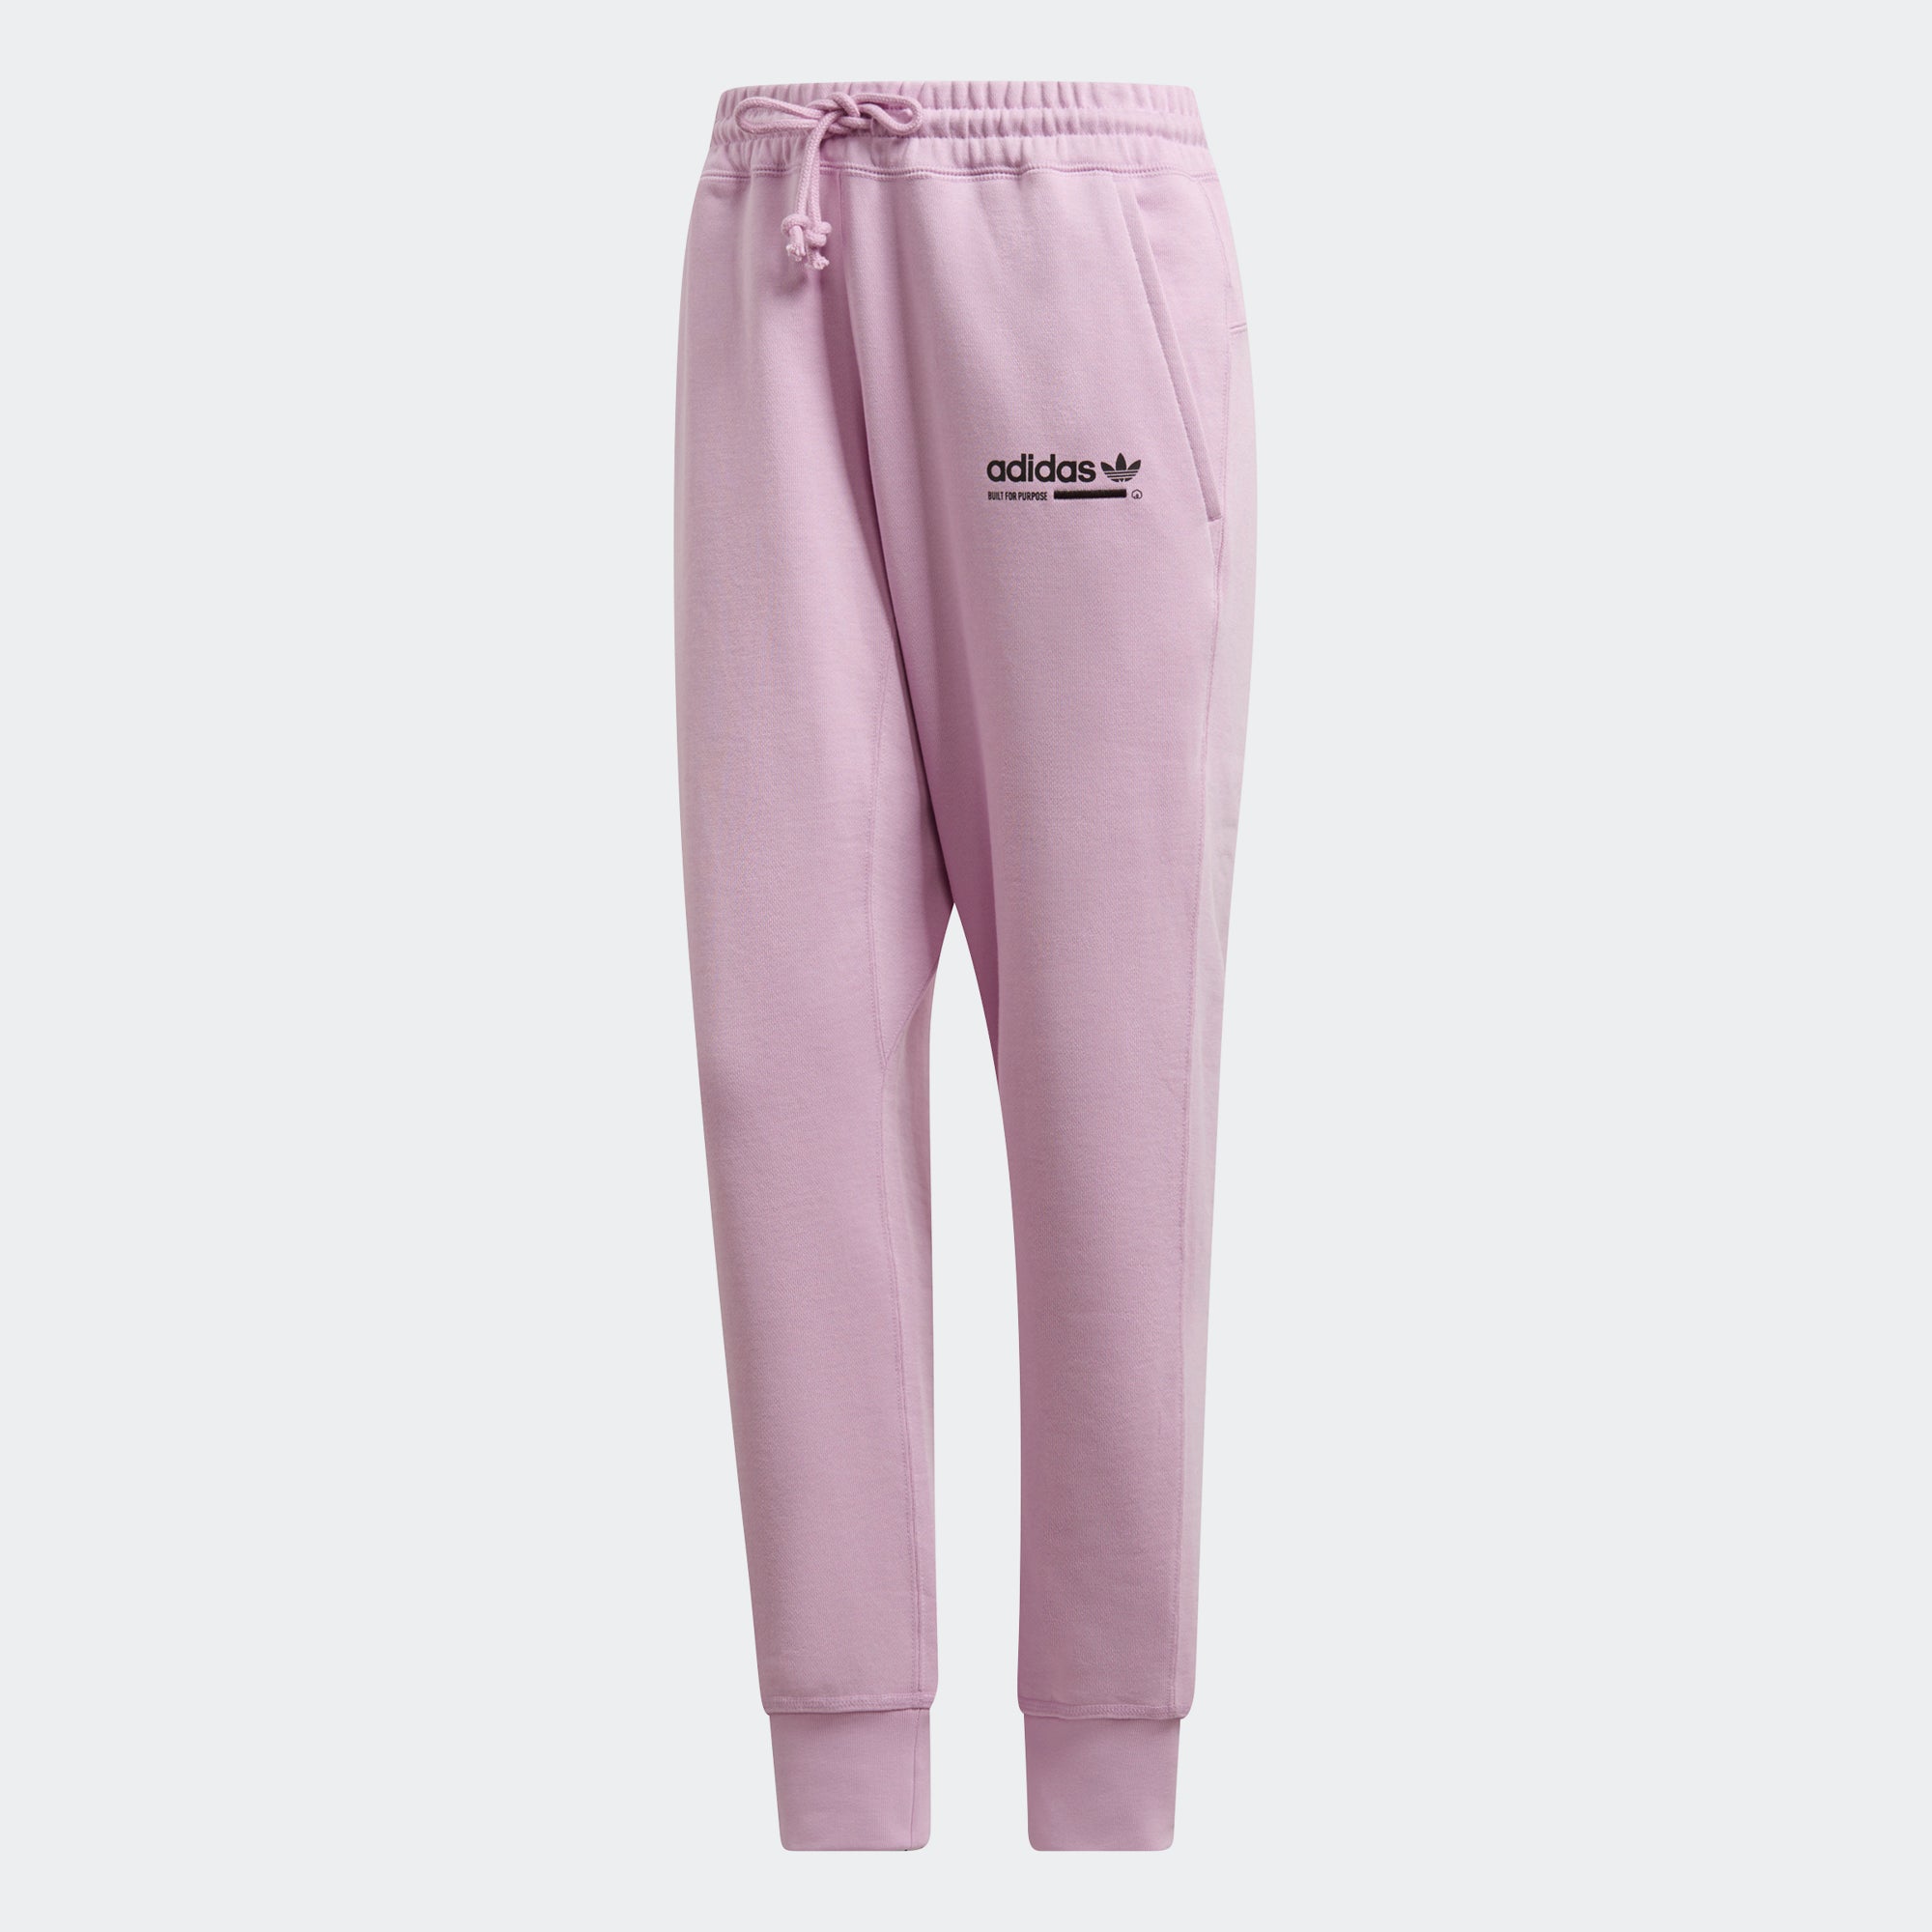 adidas lilac pants